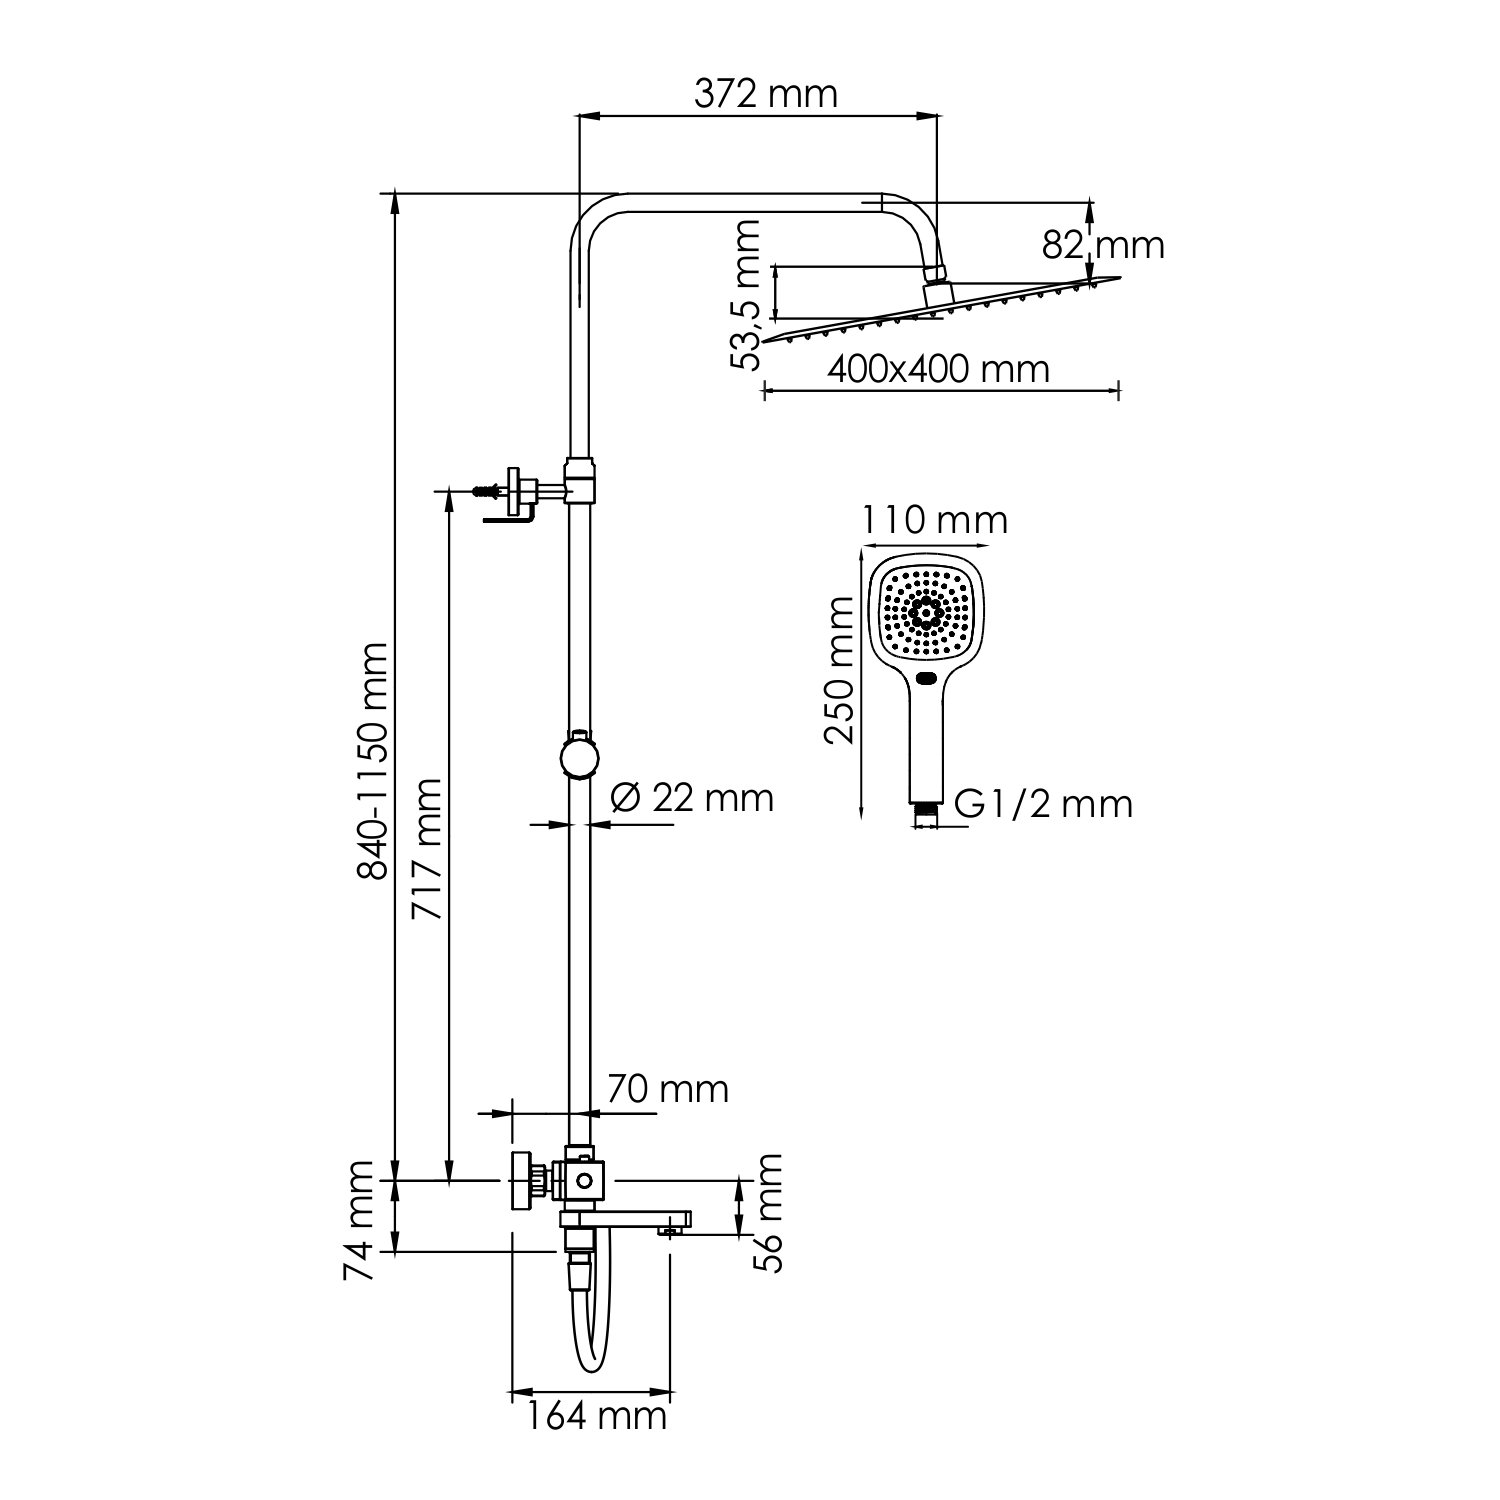 Душевая система WasserKraft 40 с термостатом хром A199.119.065.087.CH Thermo - 2